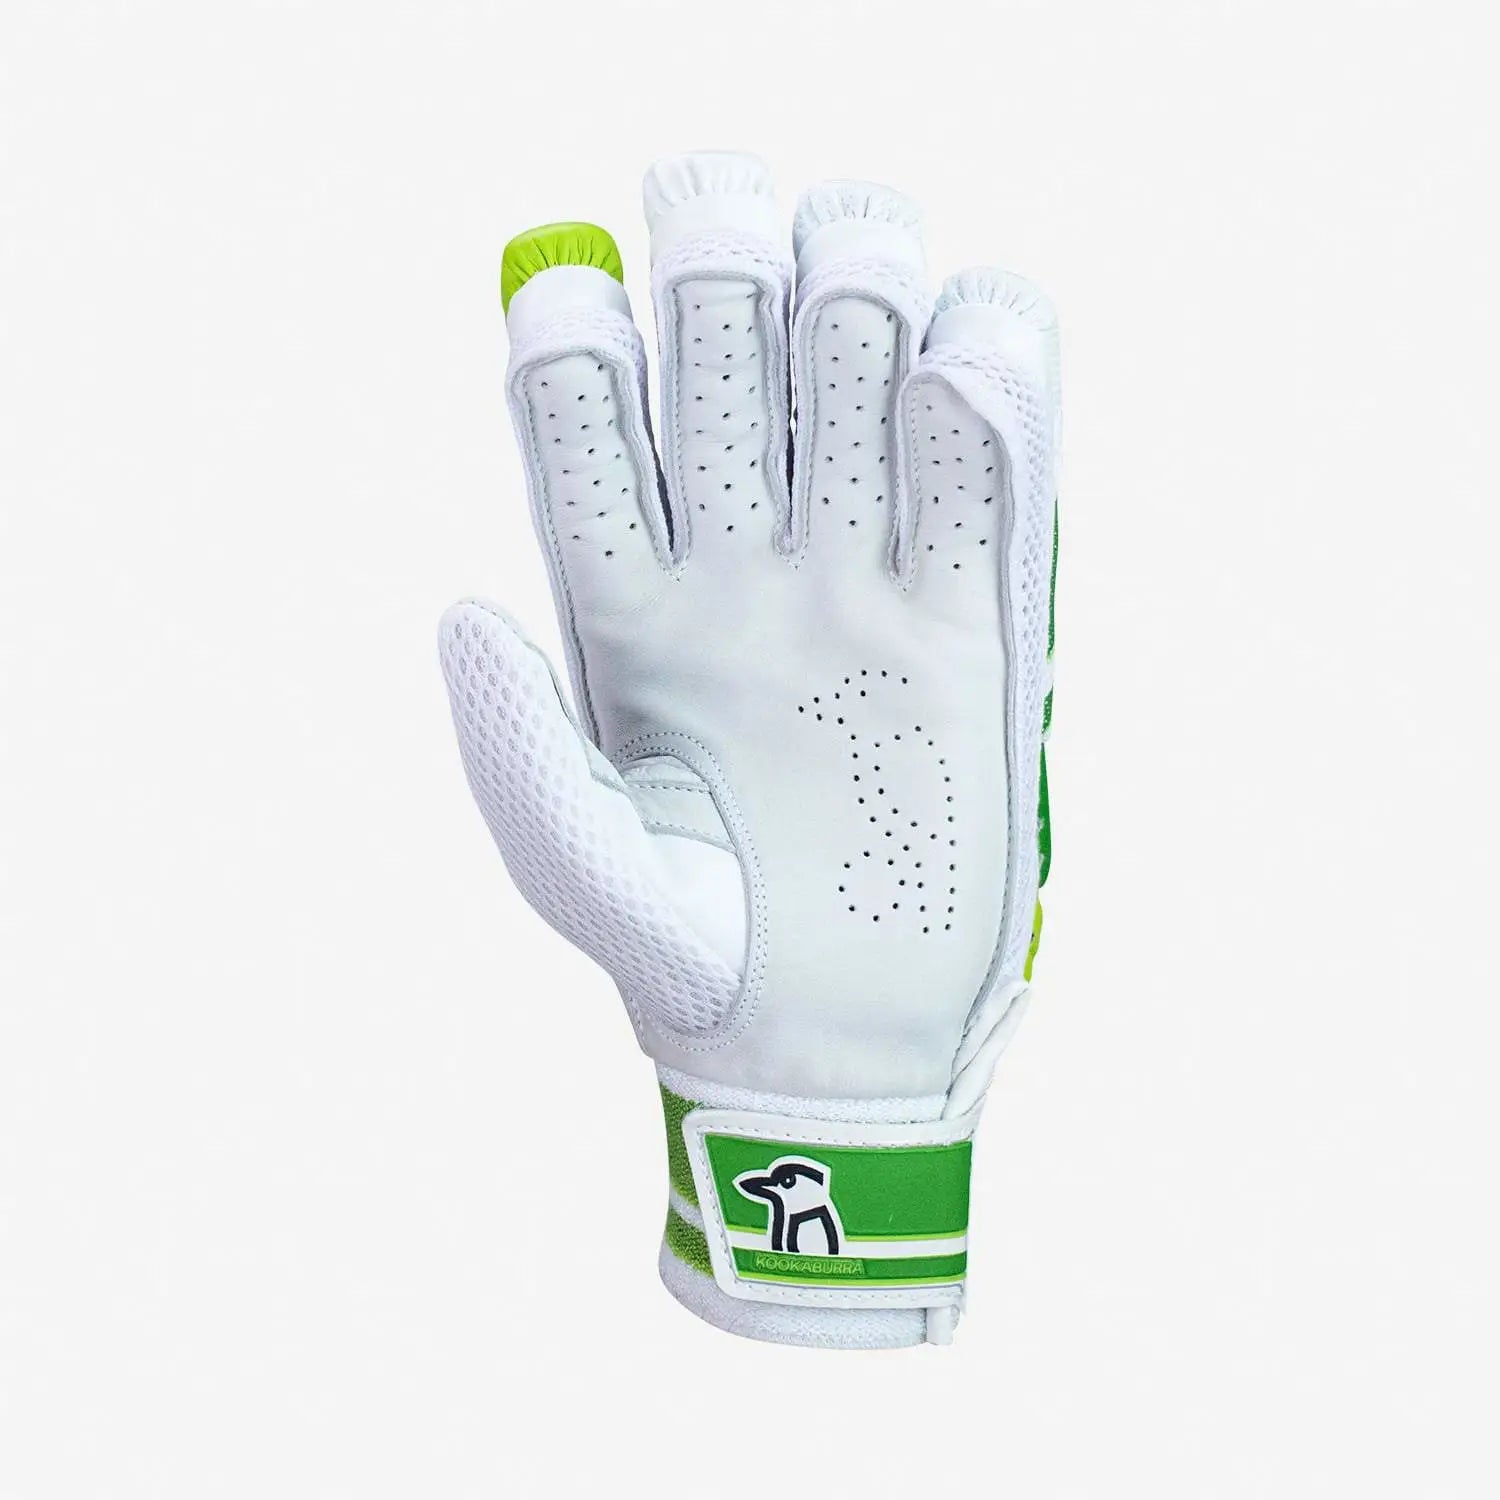 Kookaburra Kahuna 4.1 Cricket Batting Gloves Comfort and Protection - GLOVE - BATTING